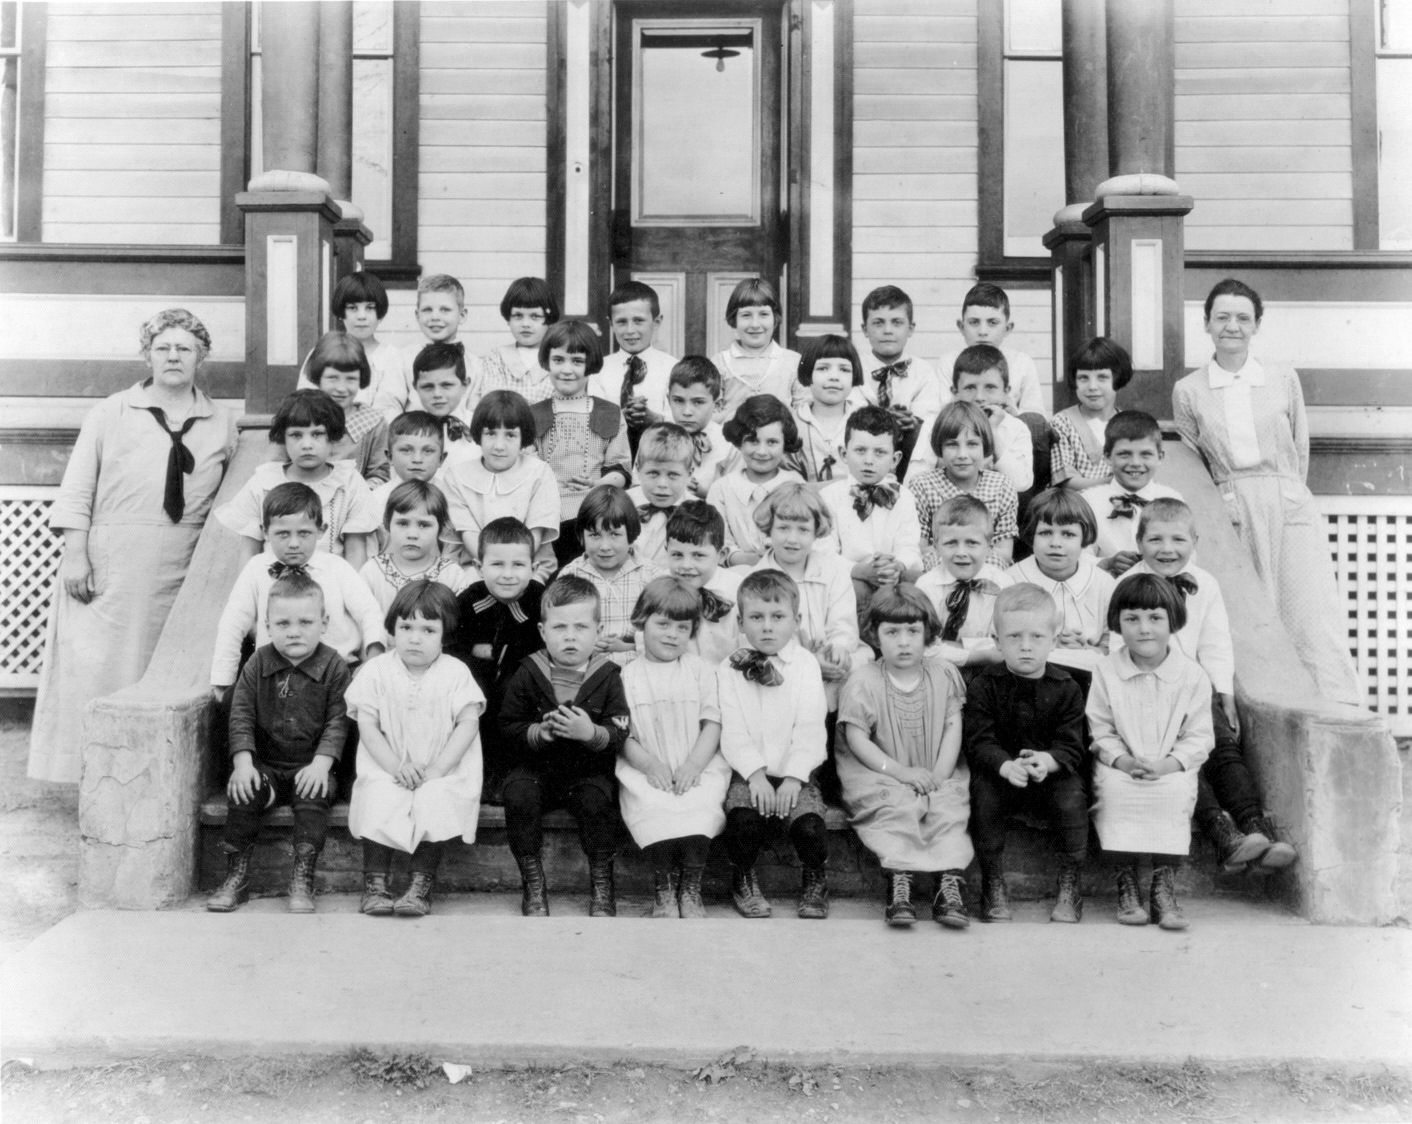 IOOF orphanage class photo, 1927